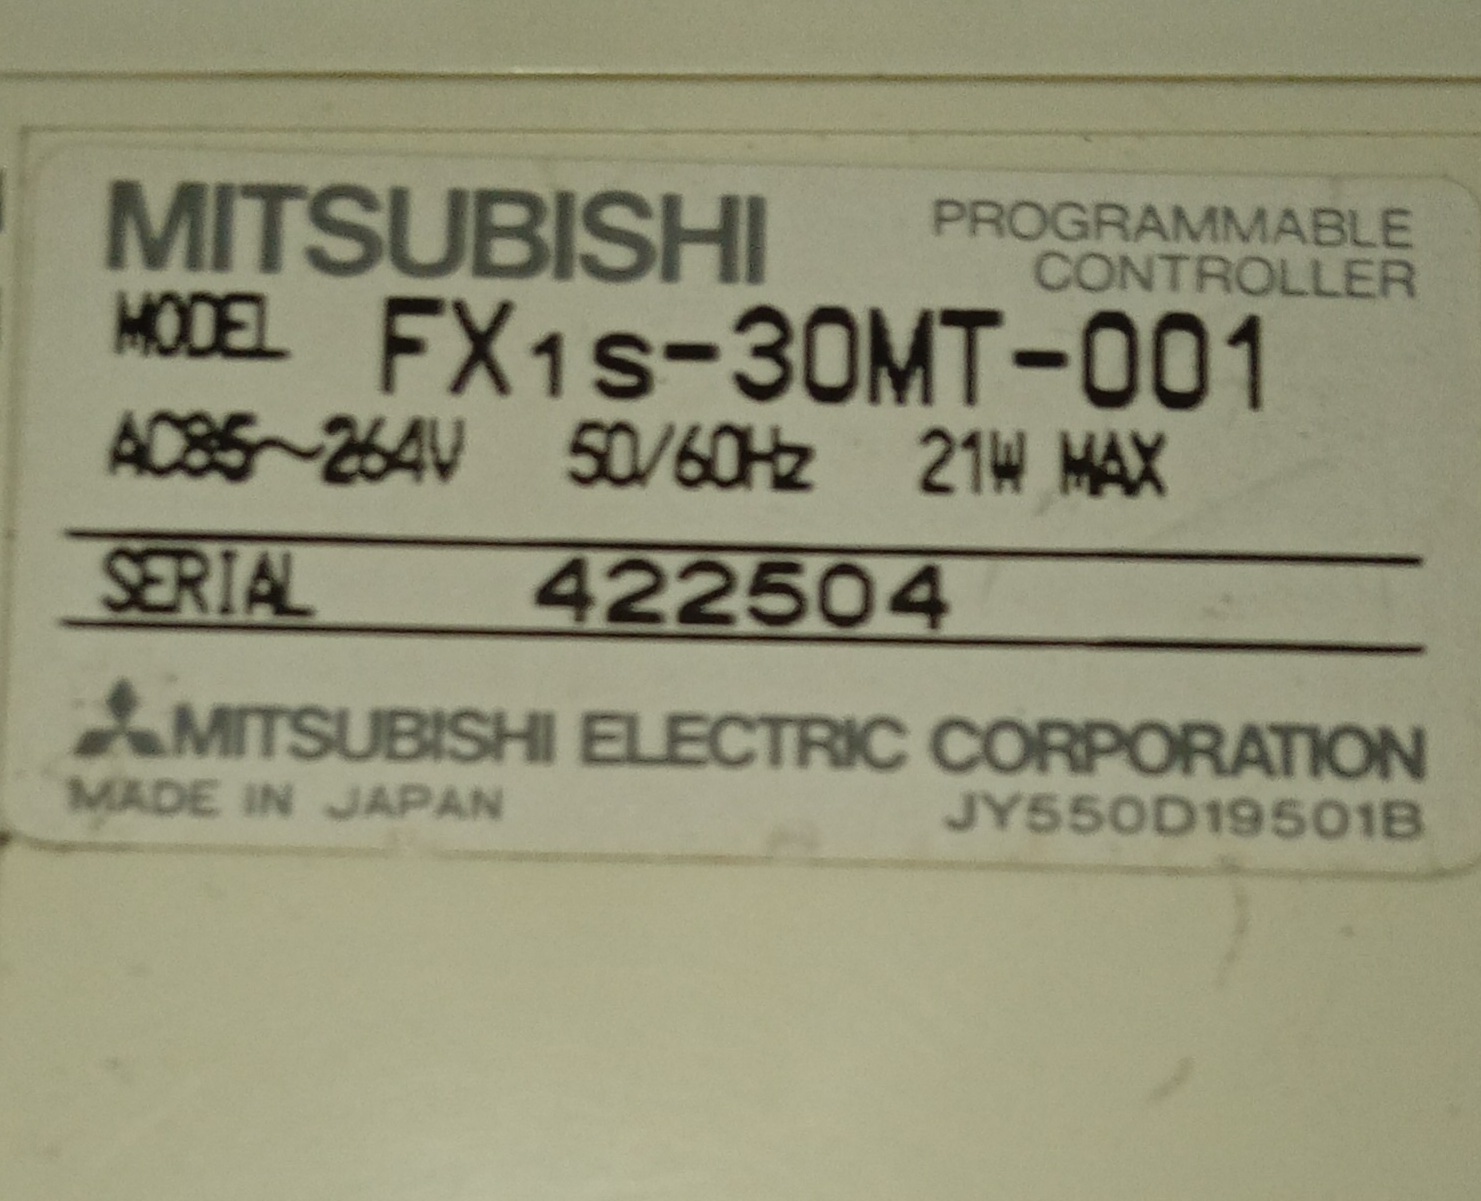 MITSUBISHI PROGRAMMABLE CONTROLLER FX1S-30MT-001